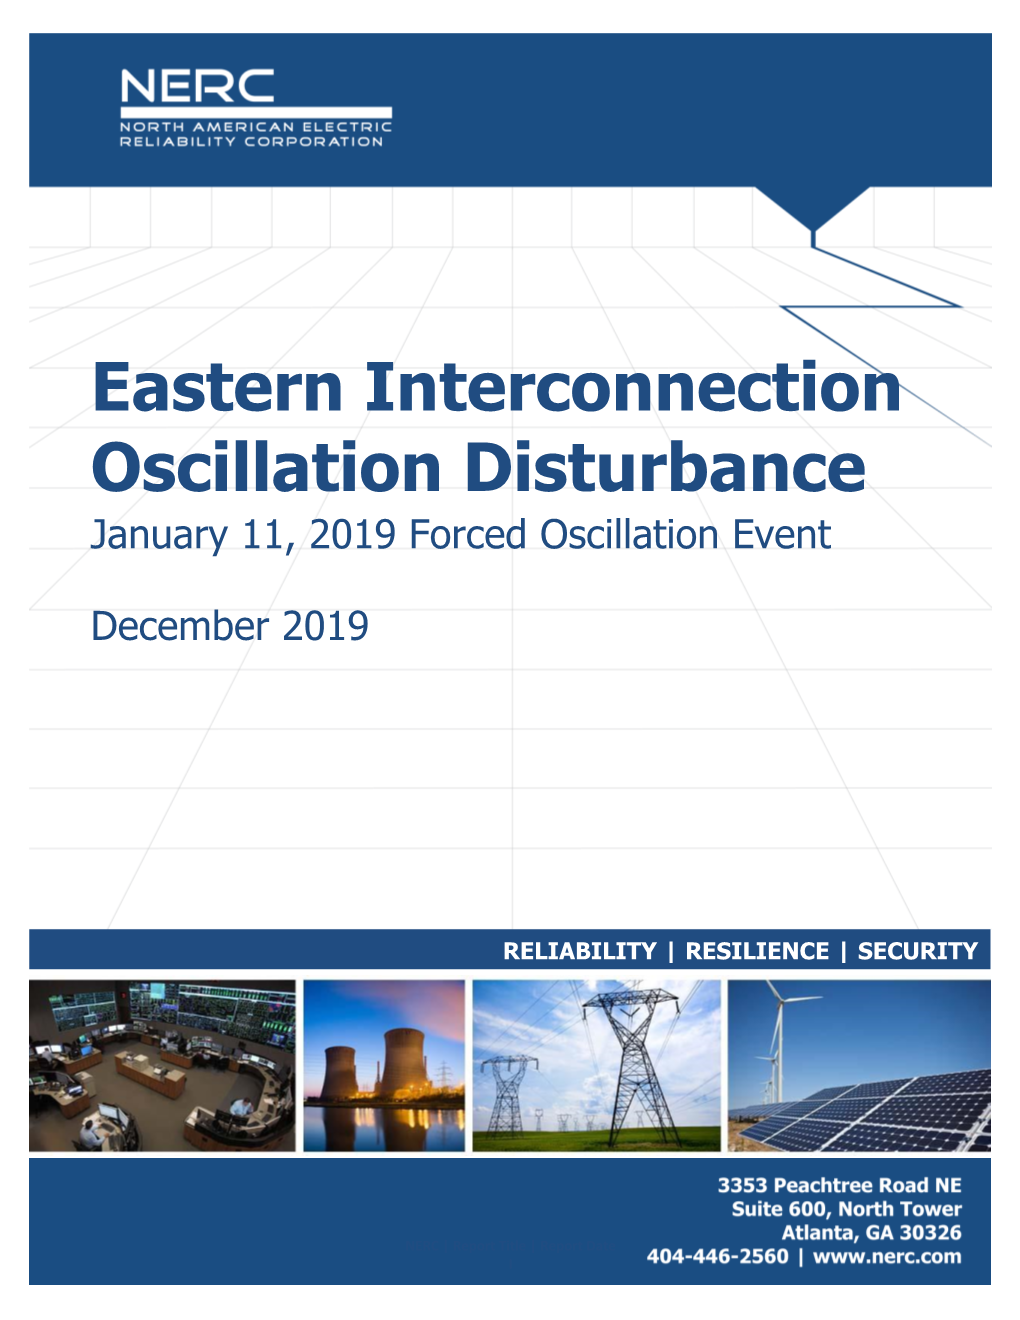 Eastern Interconnection Oscillation Disturbance January 11, 2019 Forced Oscillation Event